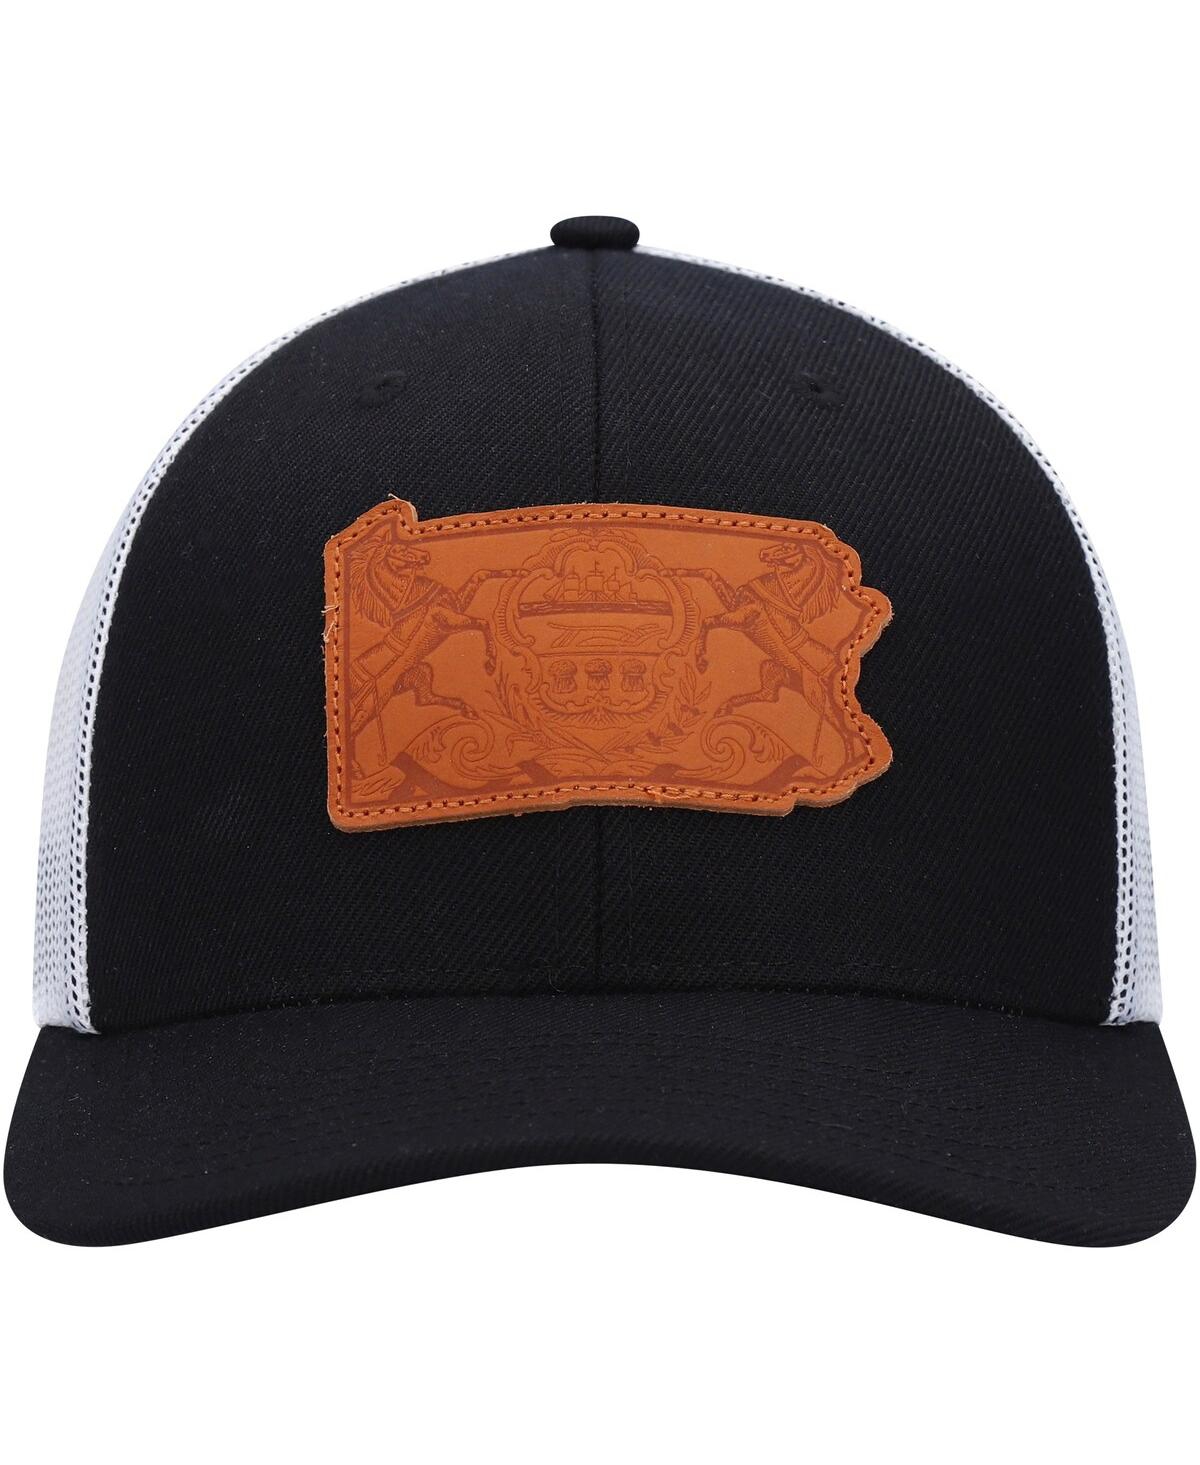 Shop Local Crowns Men's  Black Pennsylvania Leather State Applique Trucker Snapback Hat